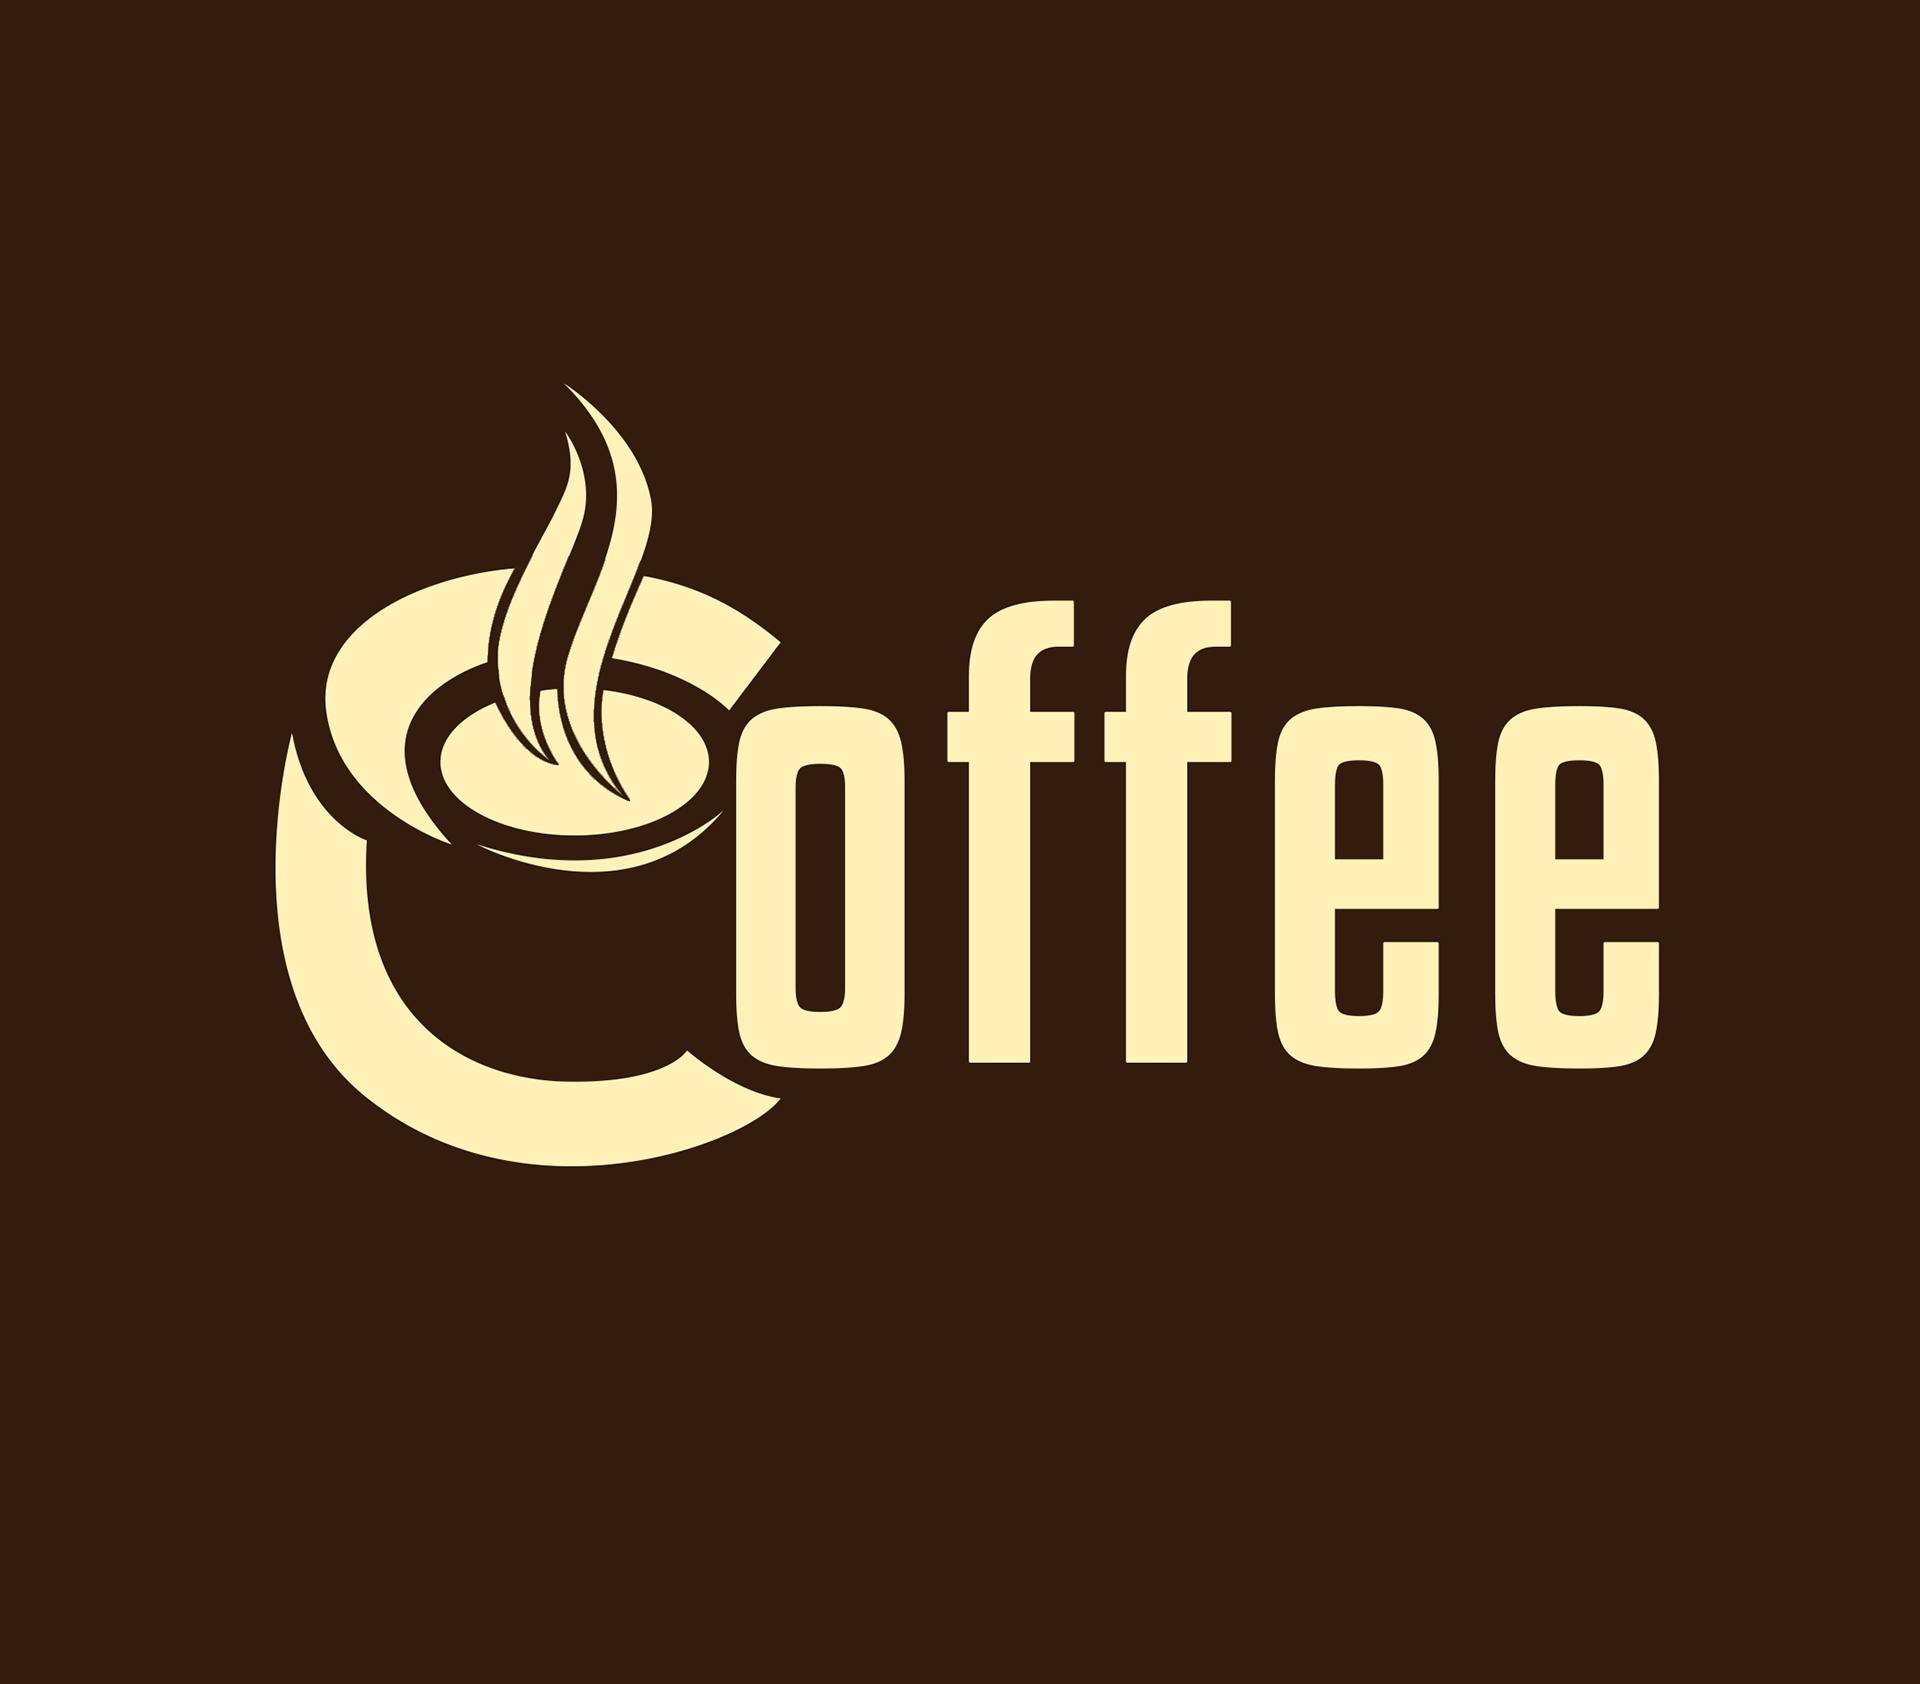 One more coffee. Логотип кофе. Логотип кафе. Лого кофейни. Креативный логотип кофе.